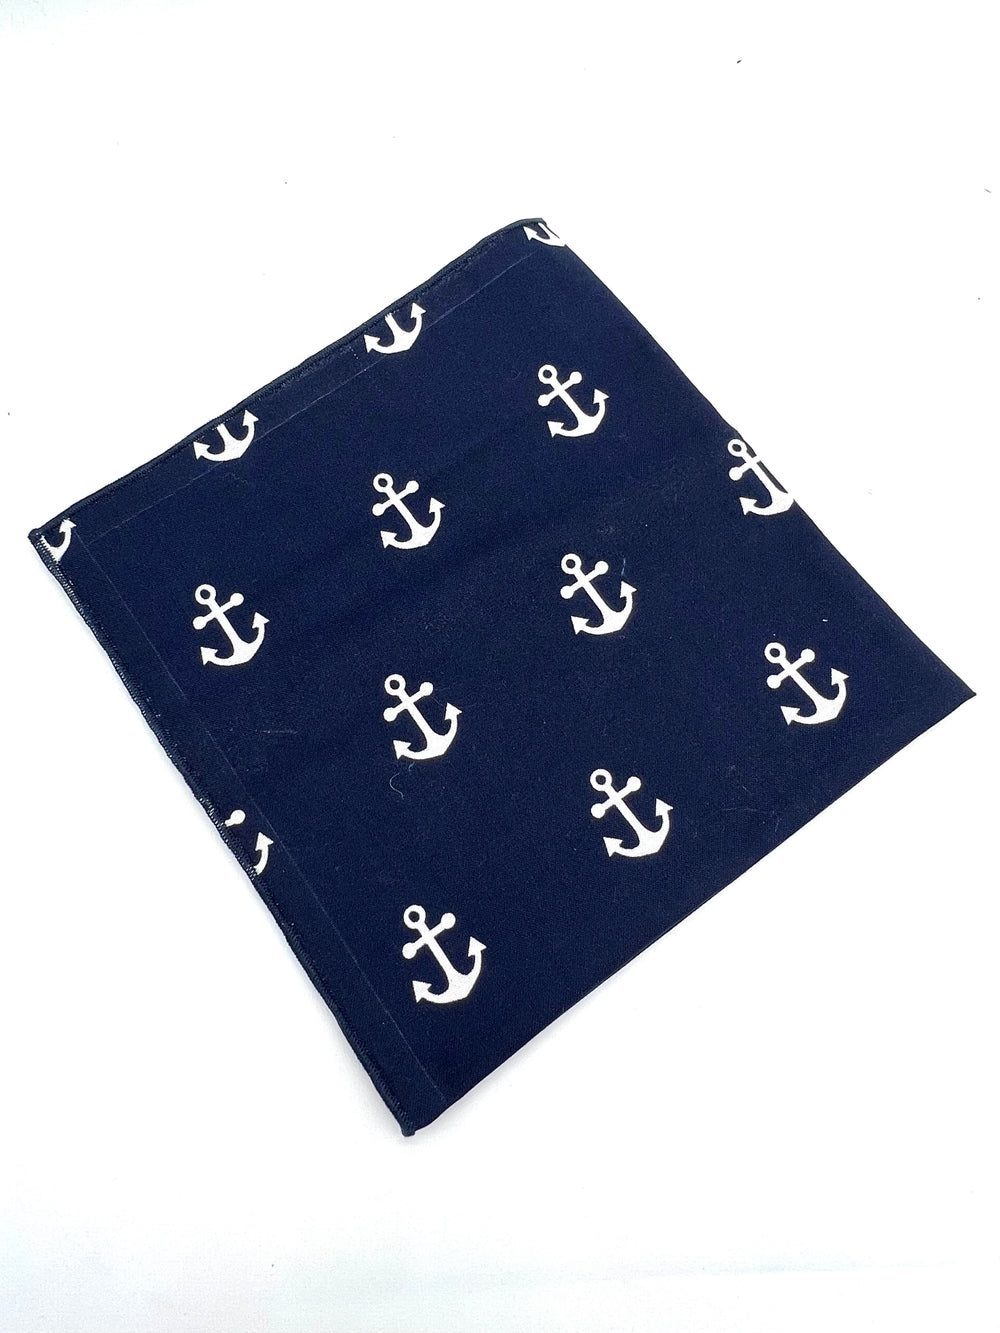 The Anchor Handkerchief